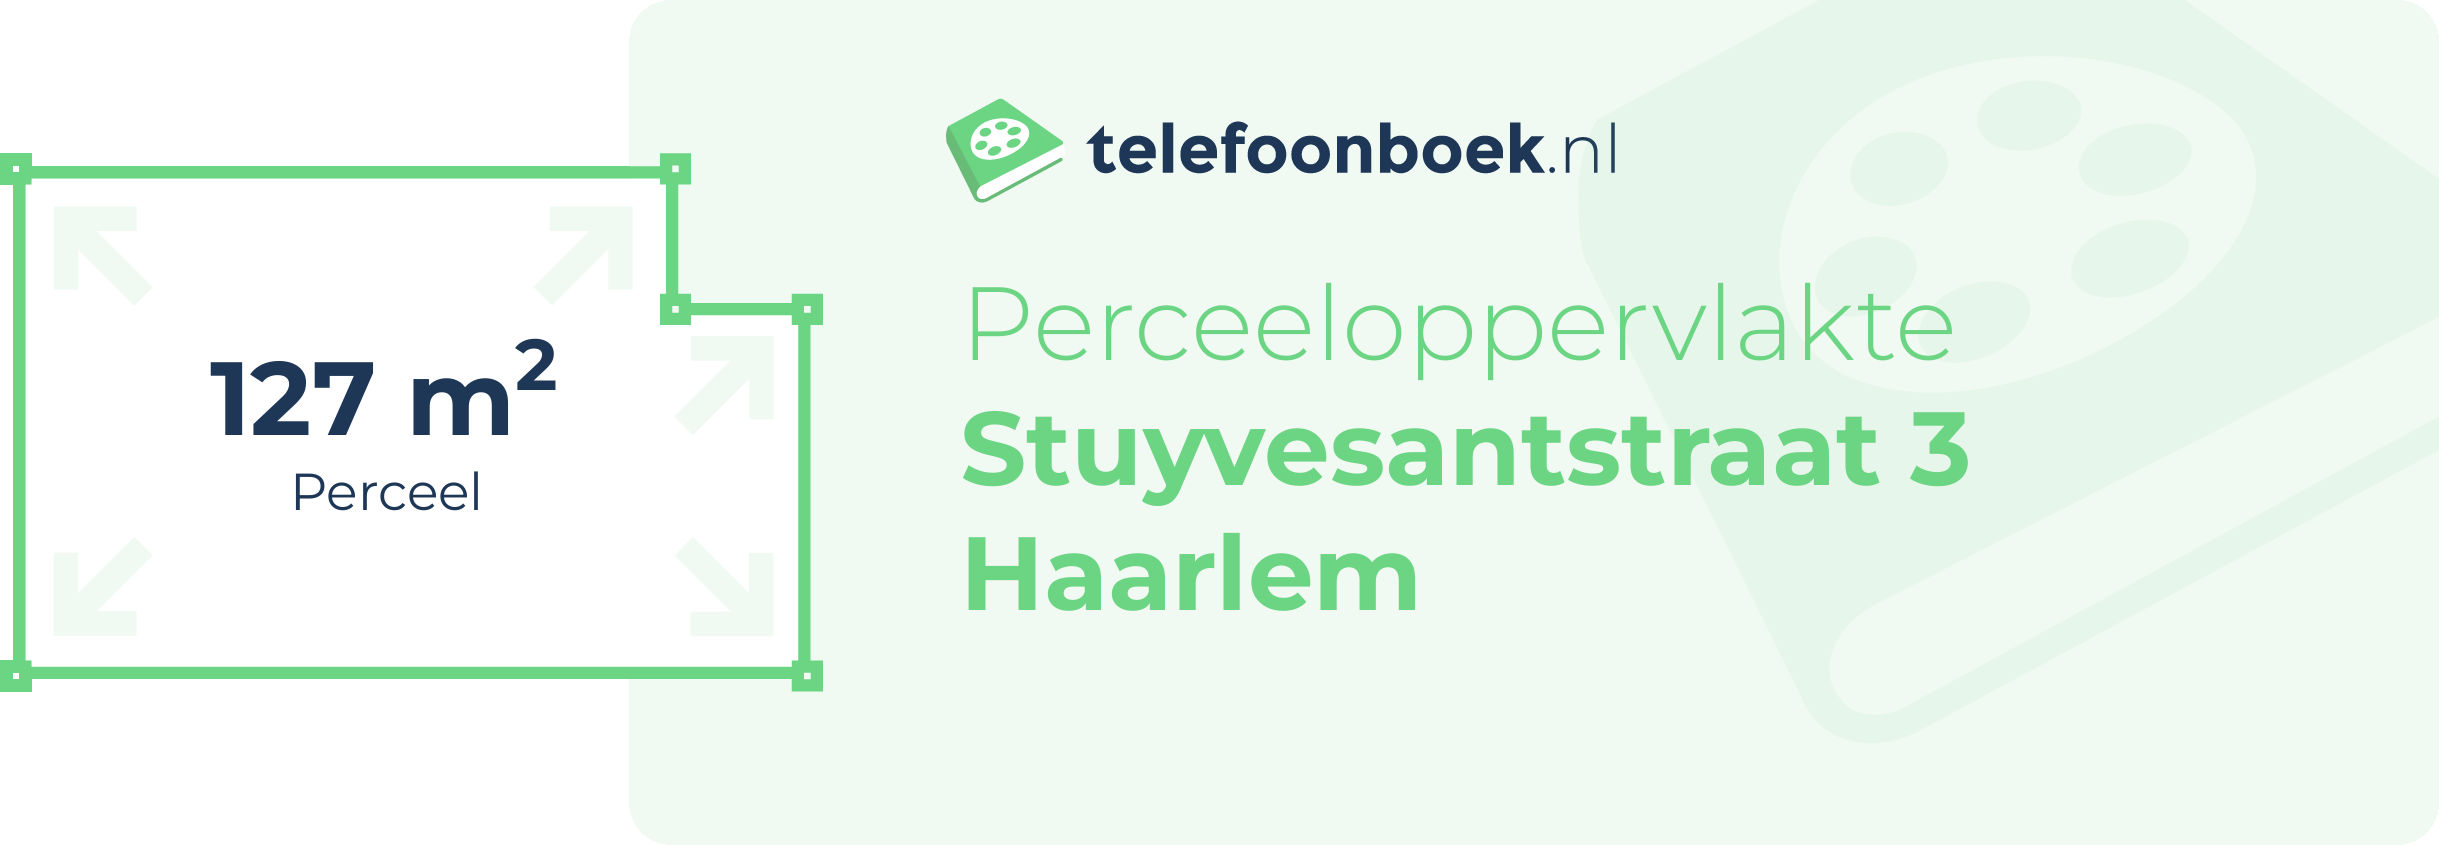 Perceeloppervlakte Stuyvesantstraat 3 Haarlem